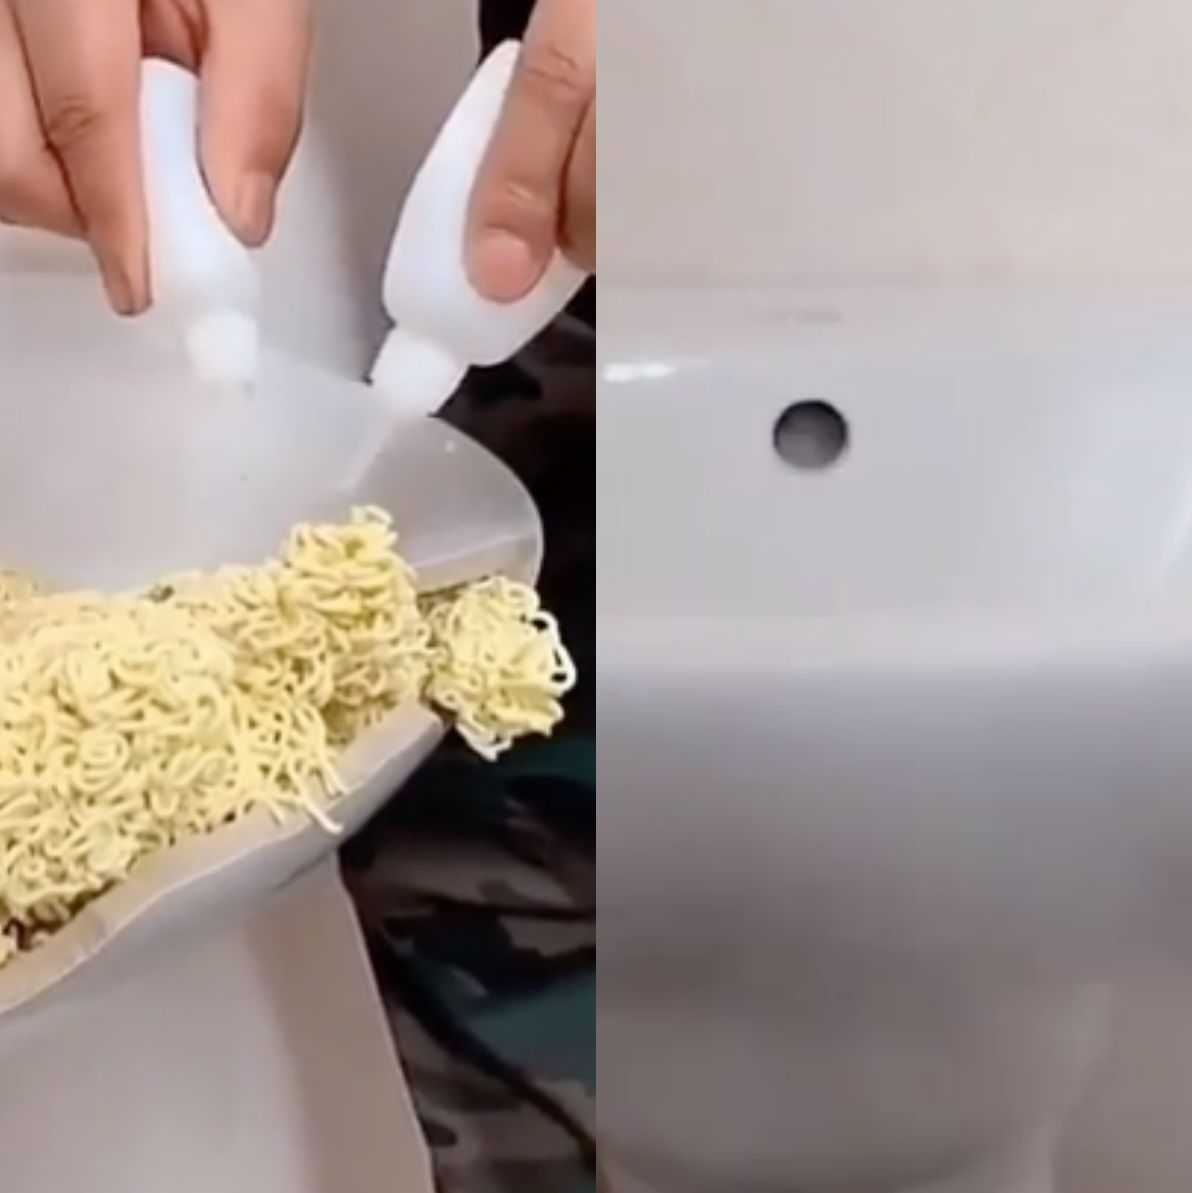 DIYer Repairs a Sink a Ramen Packet in Viral Video